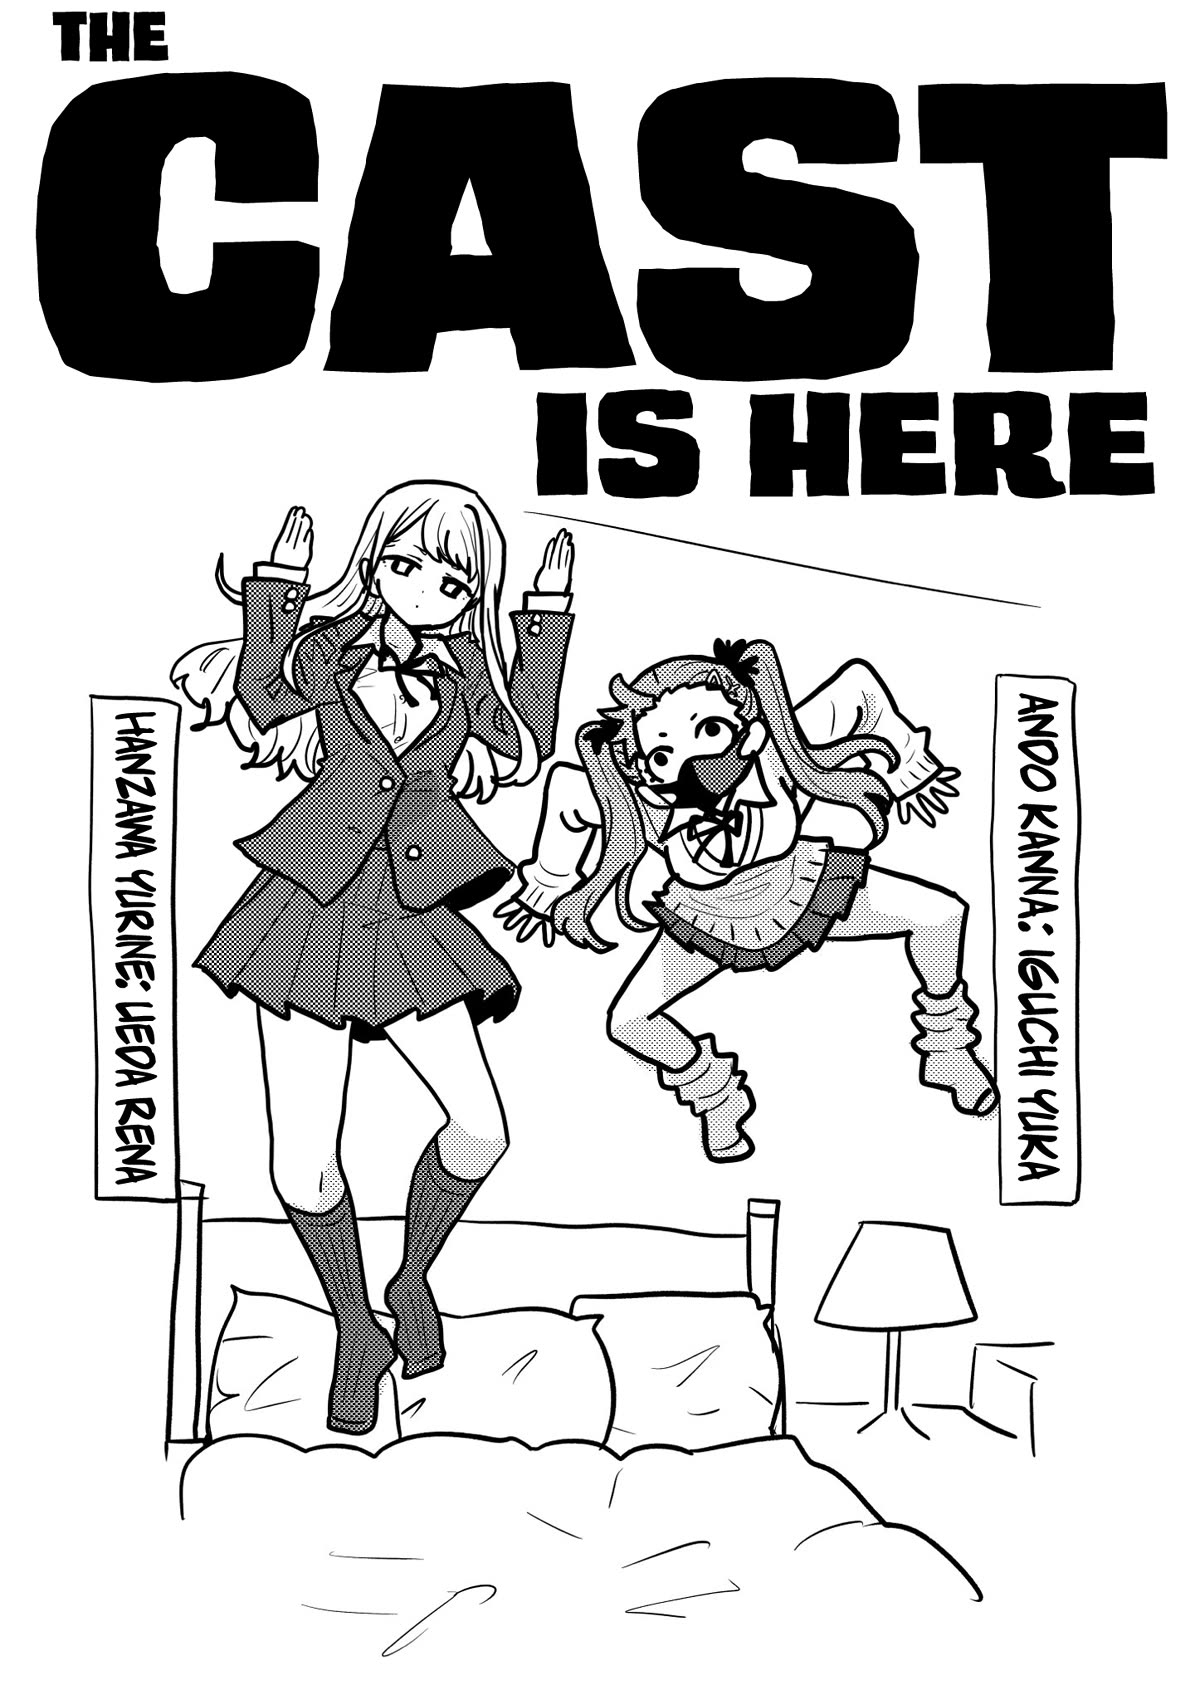 Read Boku no Kokoro no Yabai yatsu Manga English [New Chapters] Online Free  - MangaClash